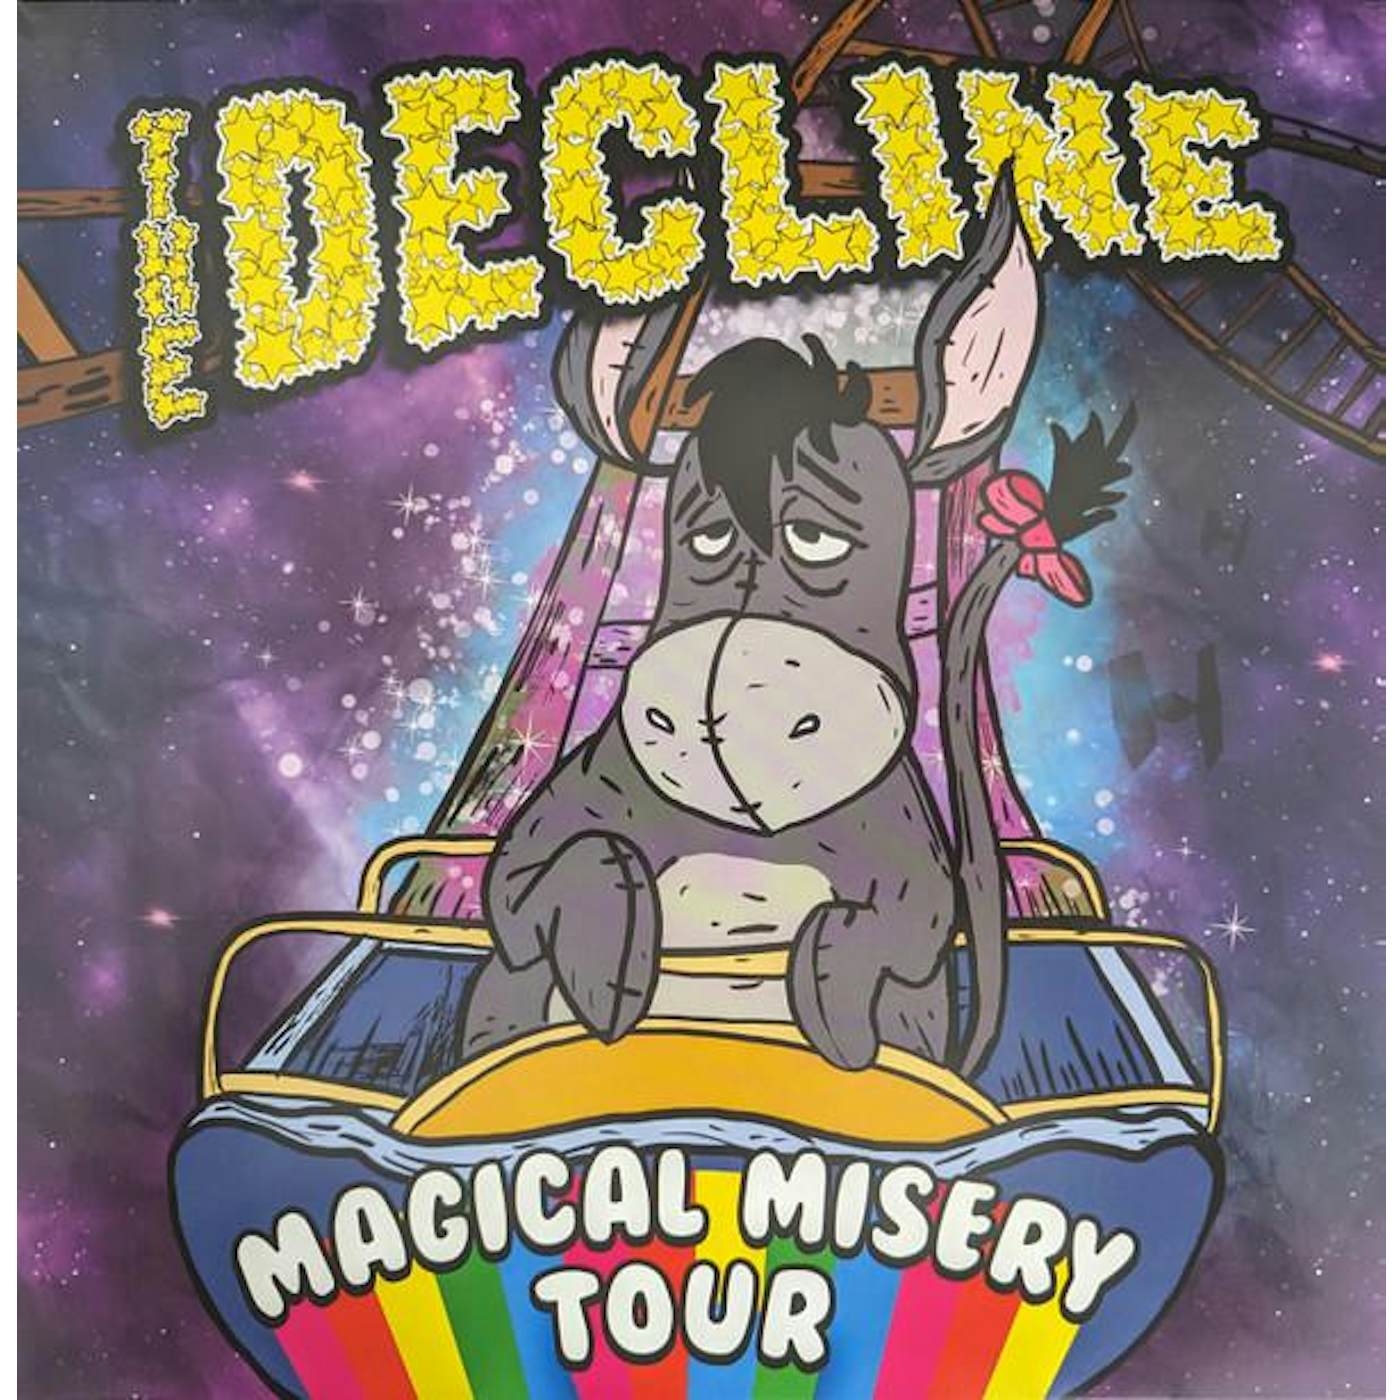 Decline MAGICAL MISERY TOUR Vinyl Record